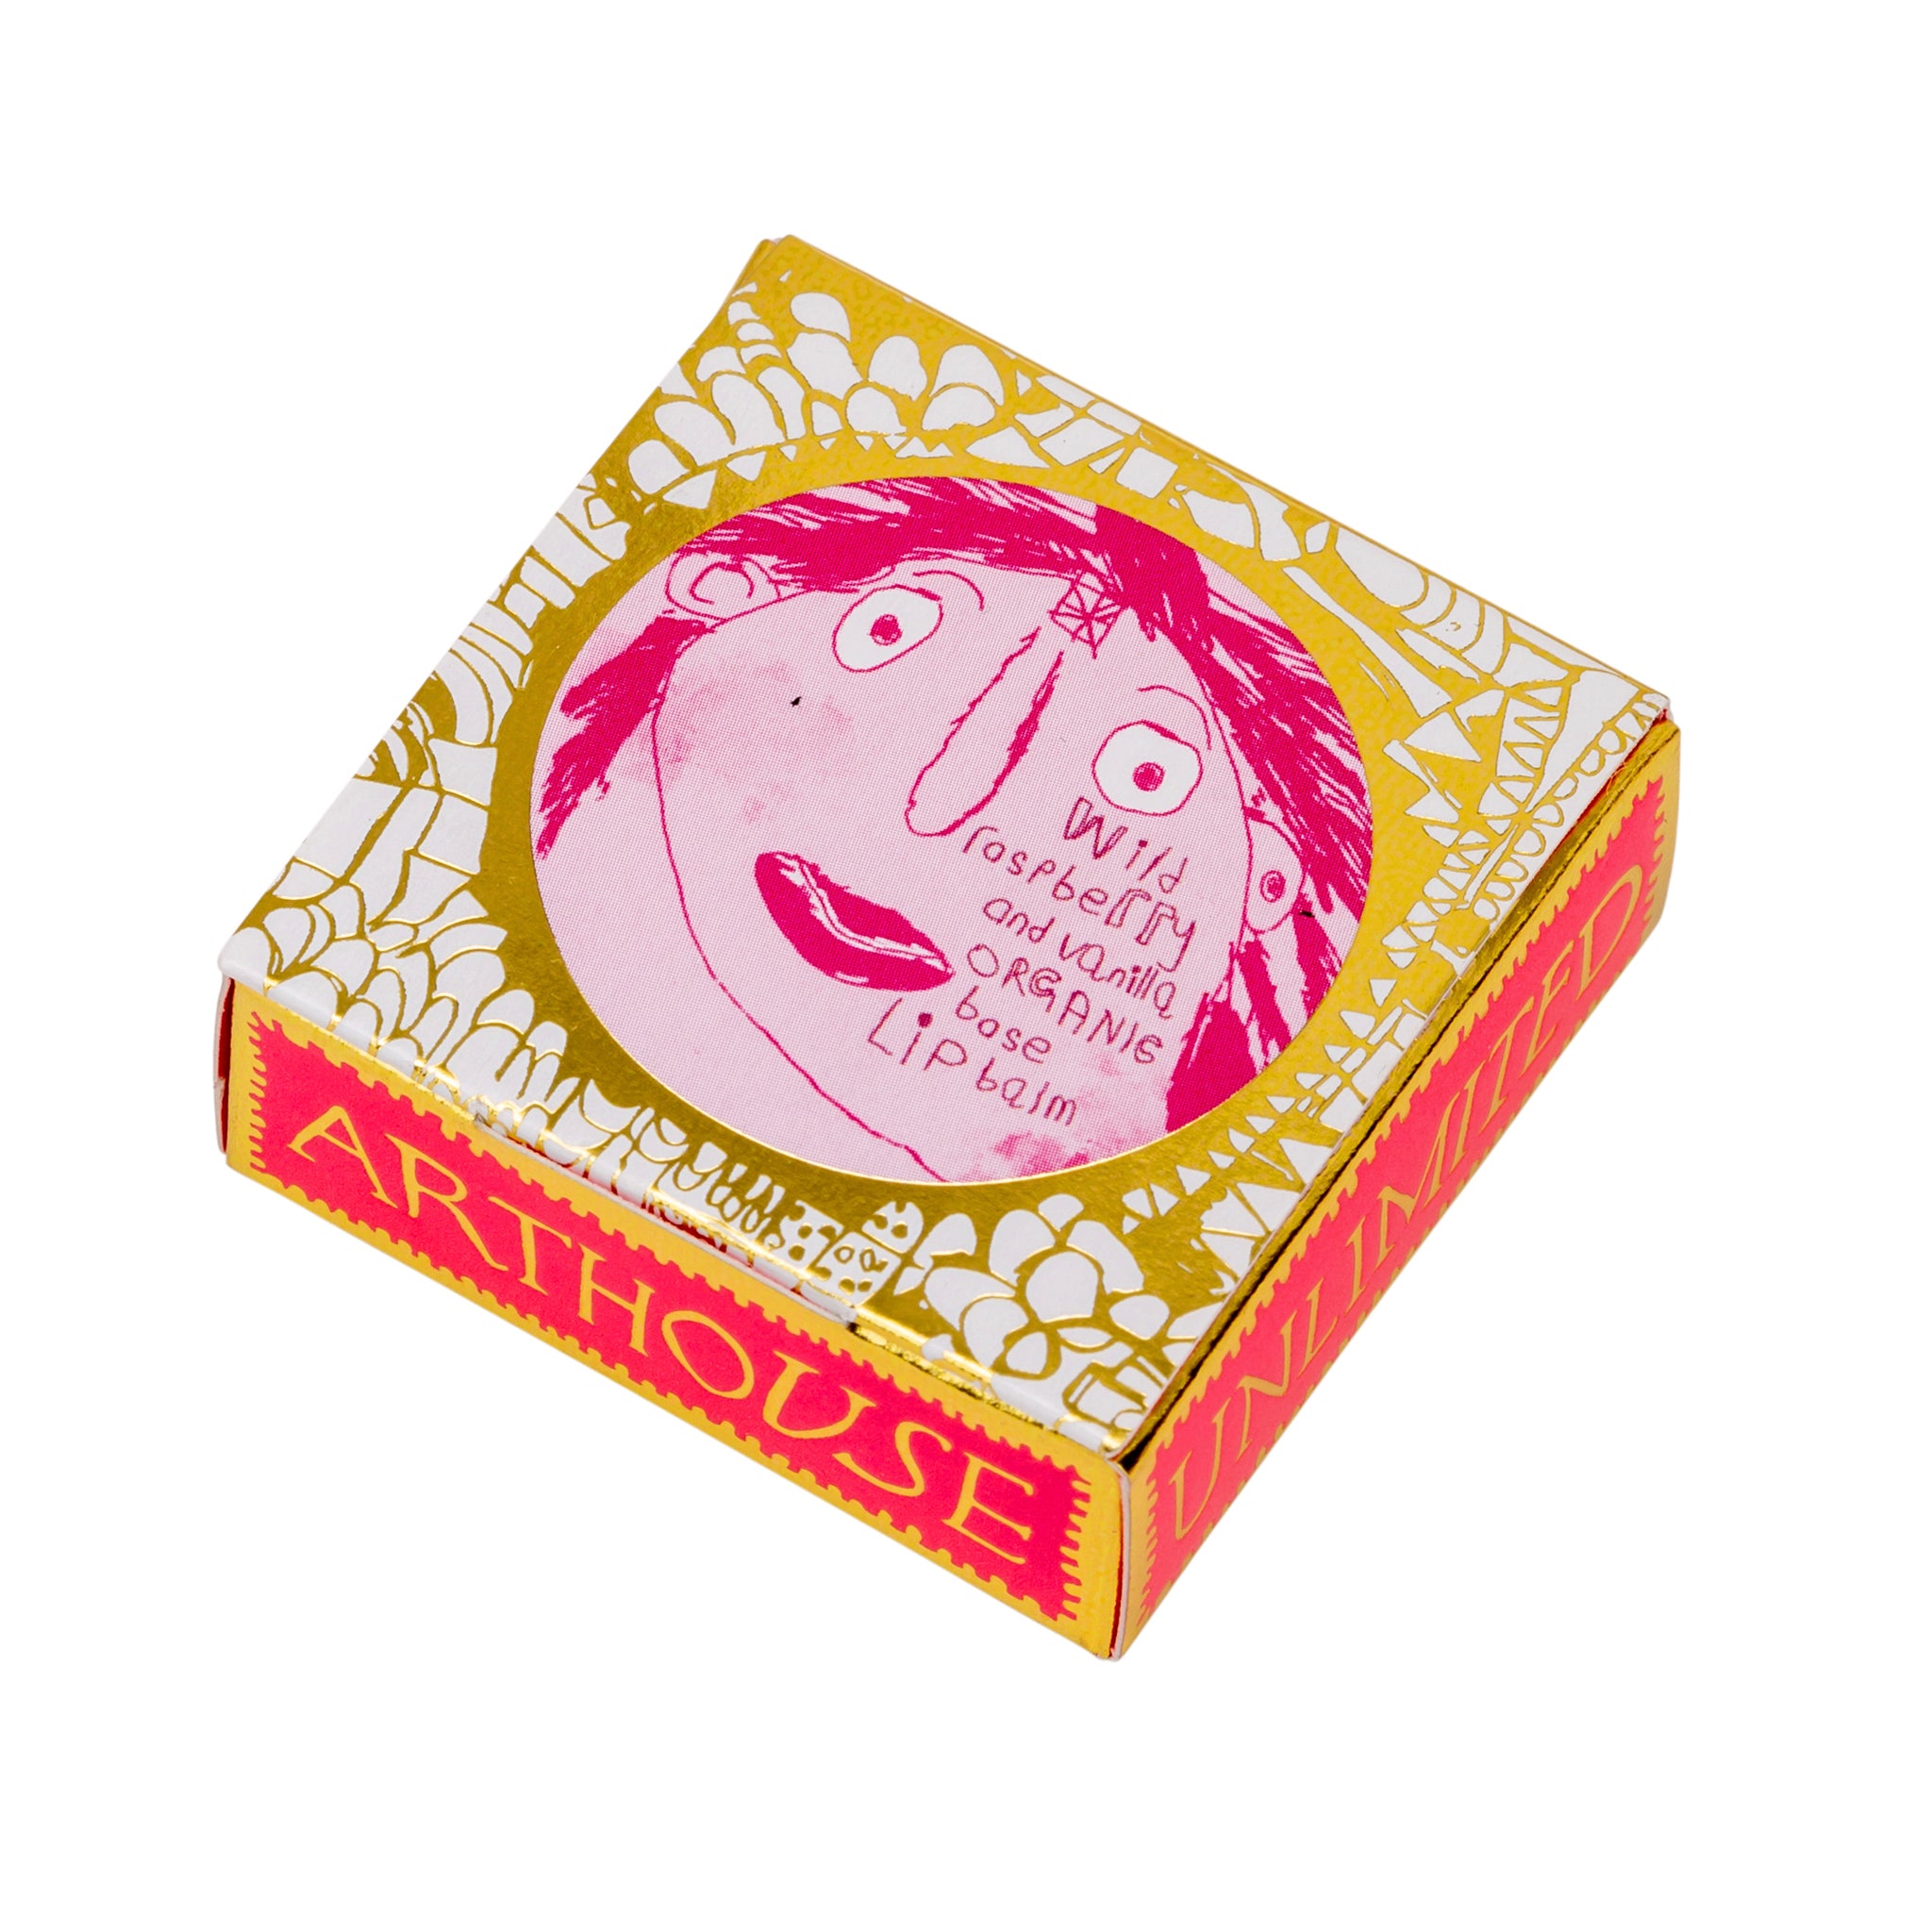 Pink and gold box containing Lady Muck, Lip Balm, Wild Raspberry & Vanilla